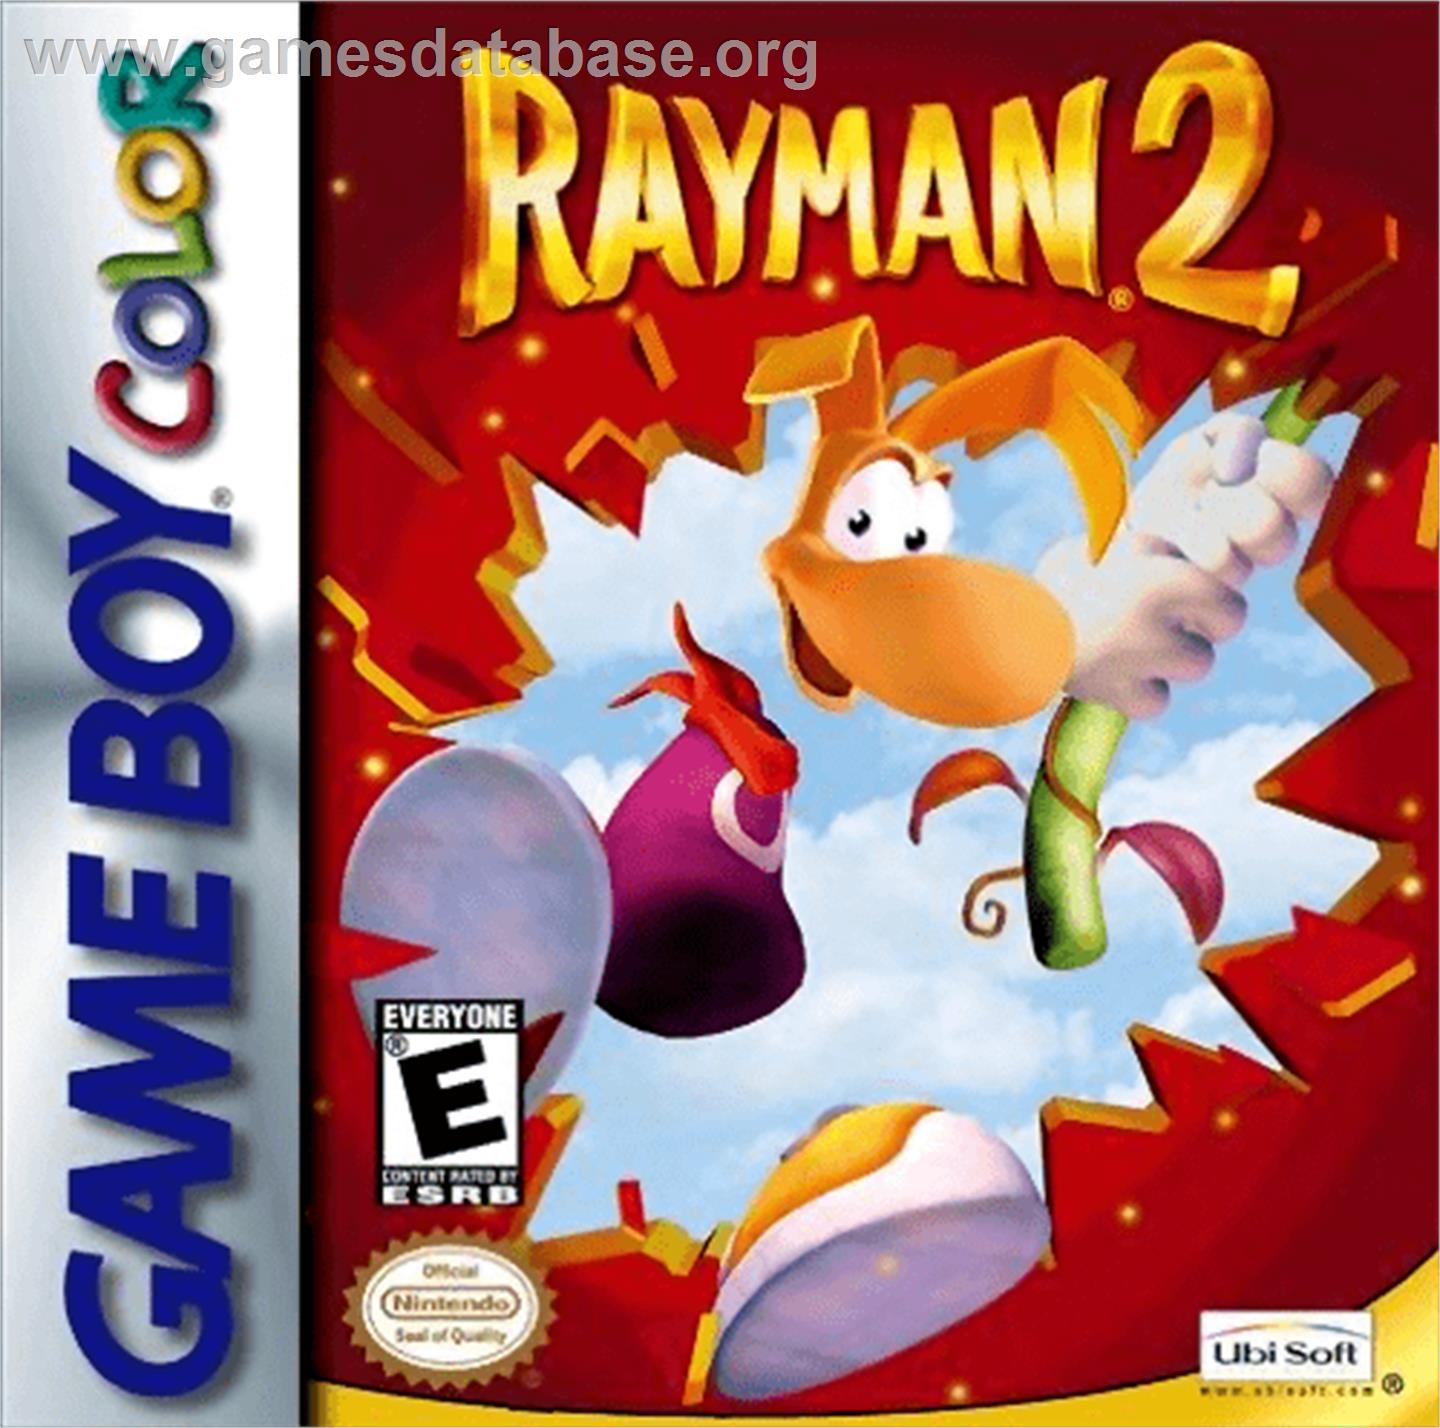 Rayman 2: The Great Escape - Nintendo Game Boy Color - Artwork - Box